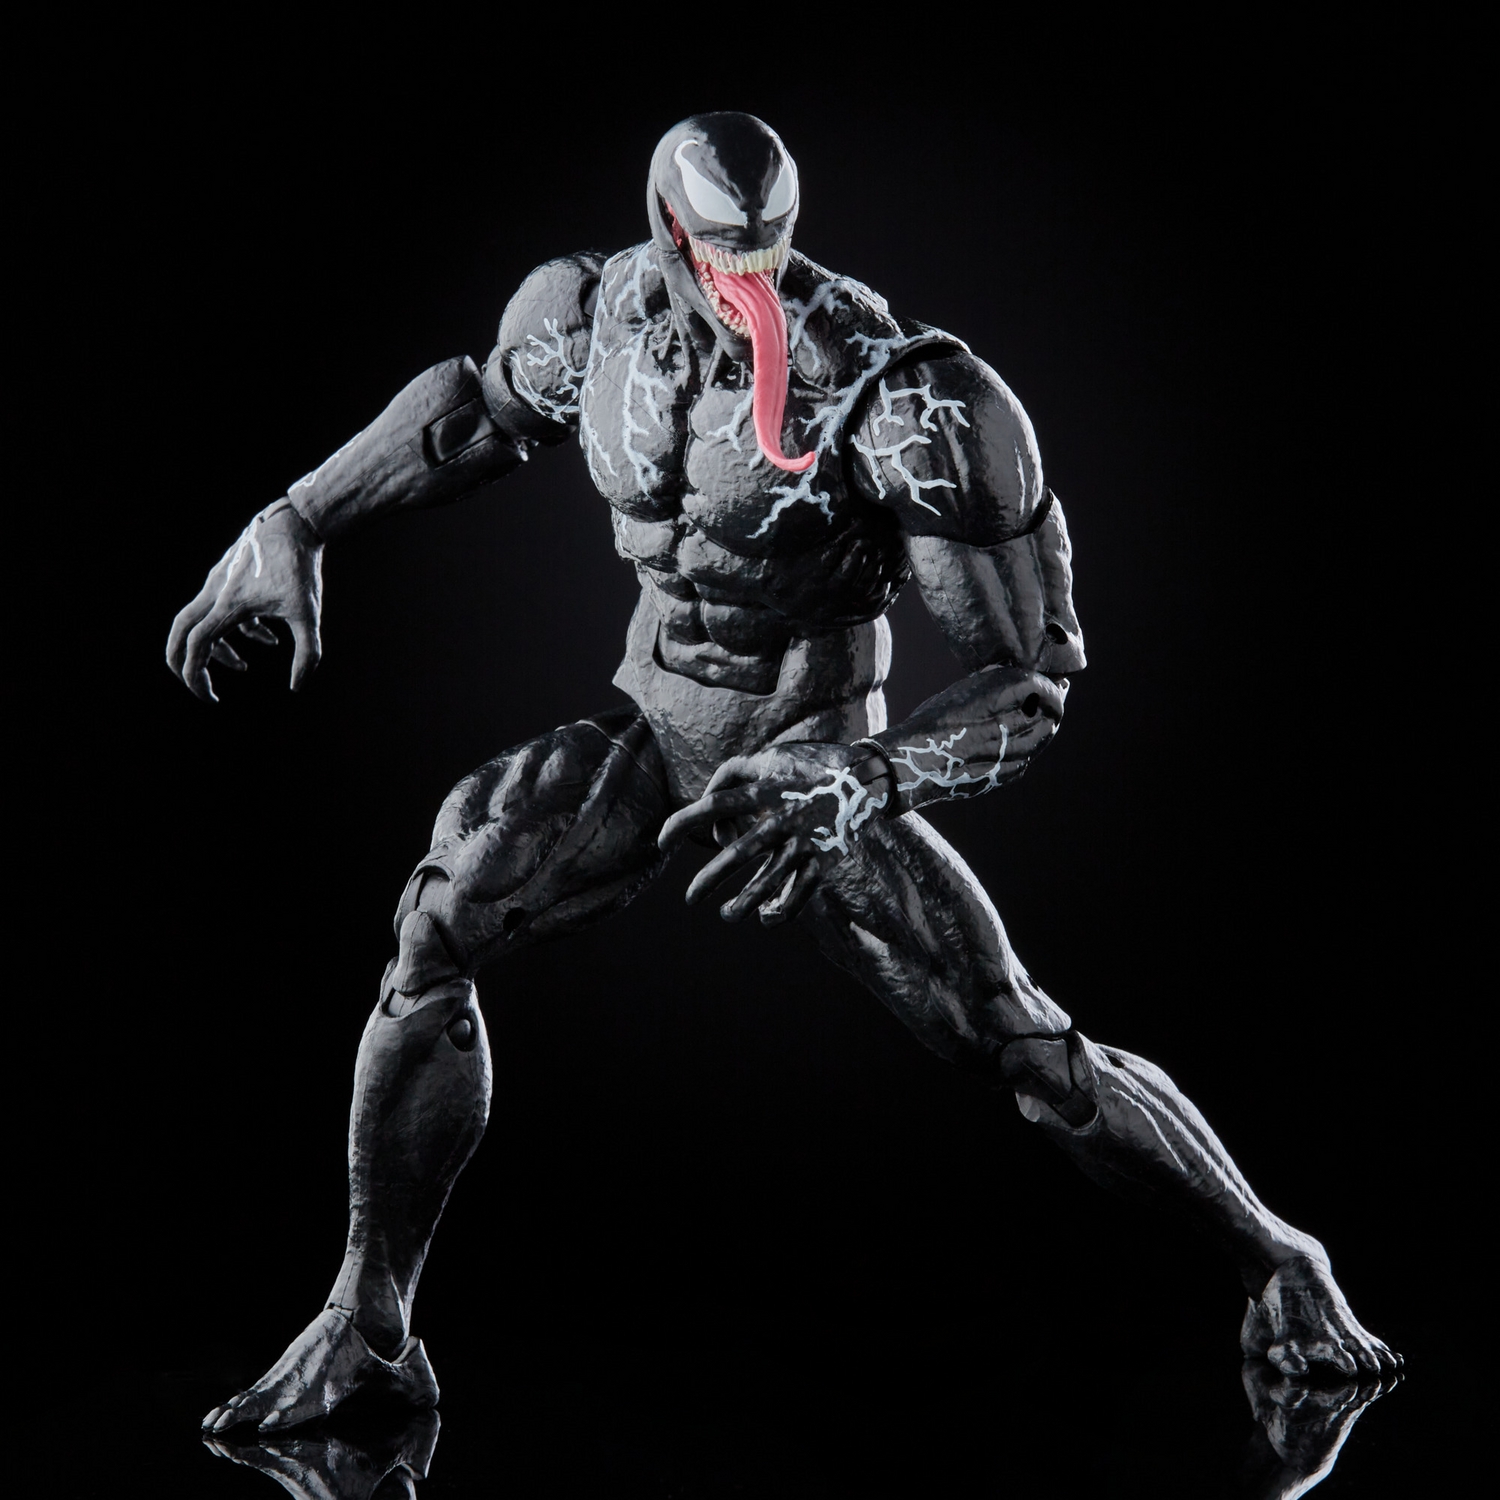 MARVEL LEGENDS SERIES 6-INCH VENOM Figure Assortment - Venom (1).jpg